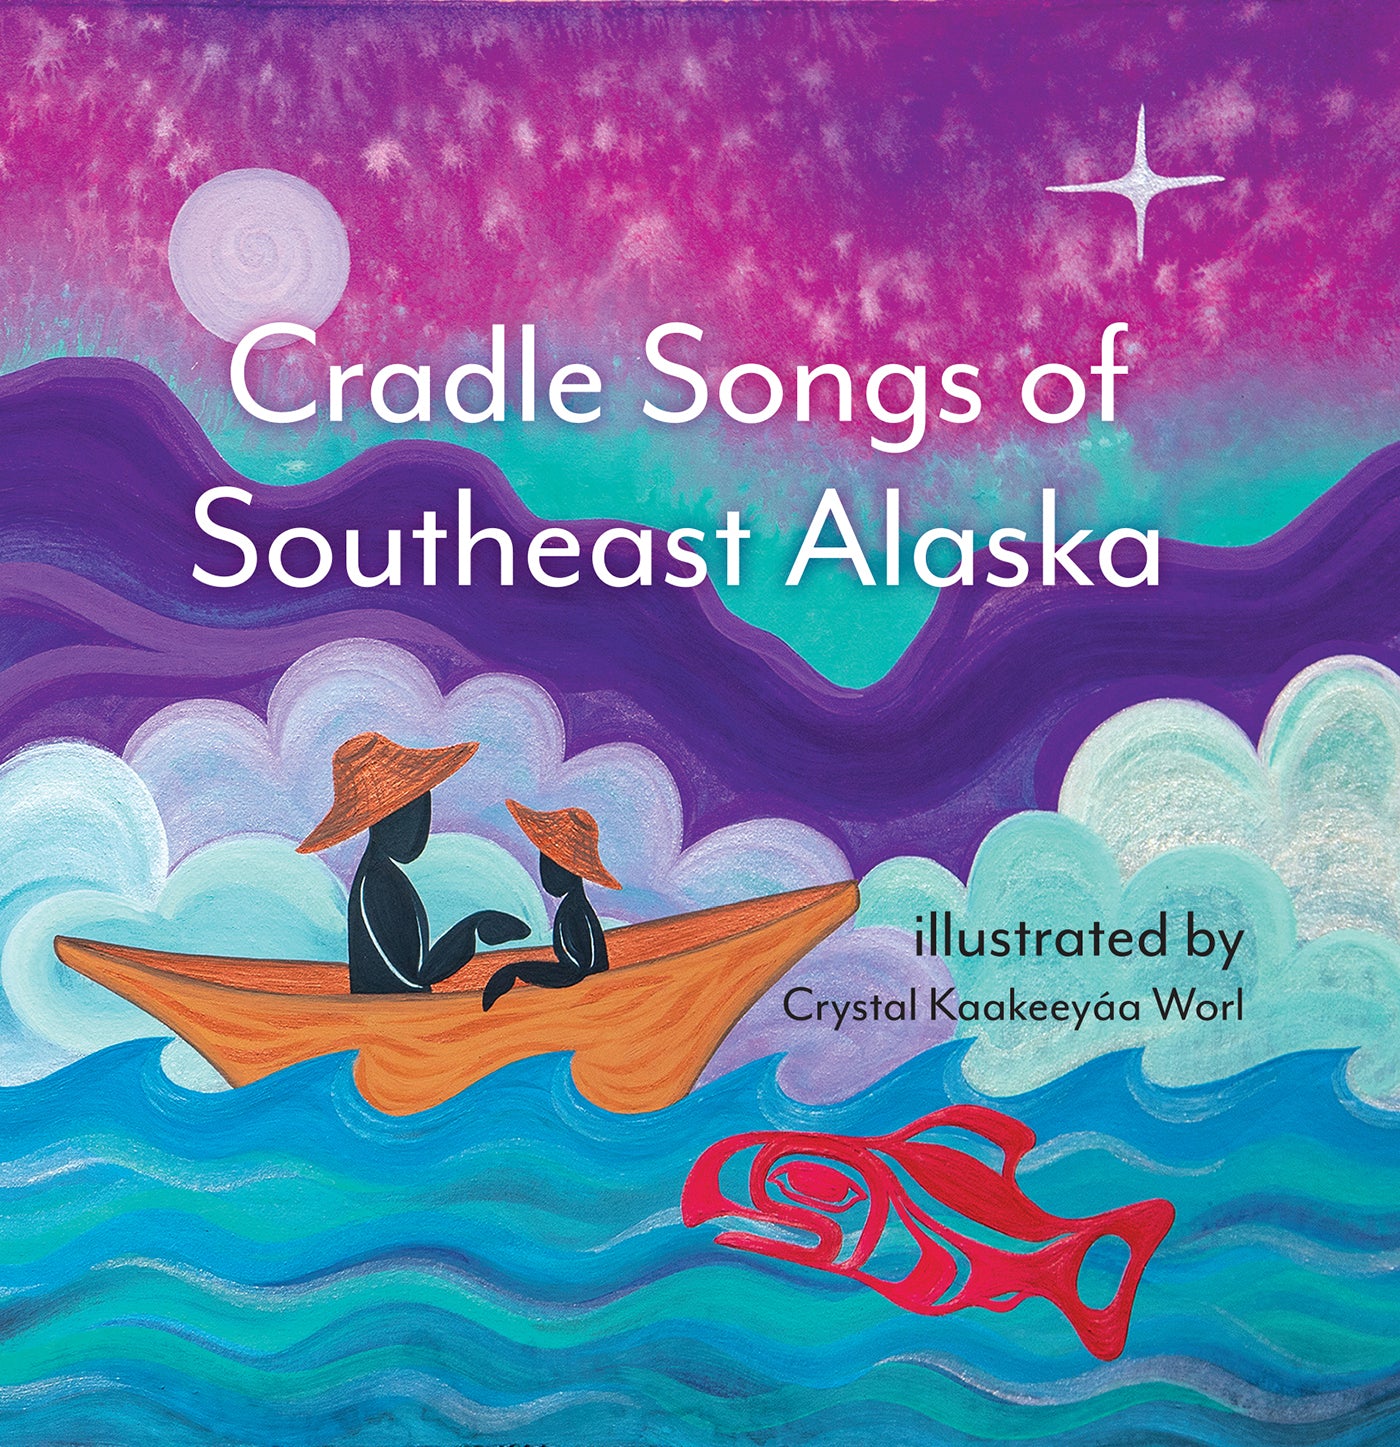 Book, BRR - “Cradle Songs of Southeast Alaska", Joseph, Peratrovich